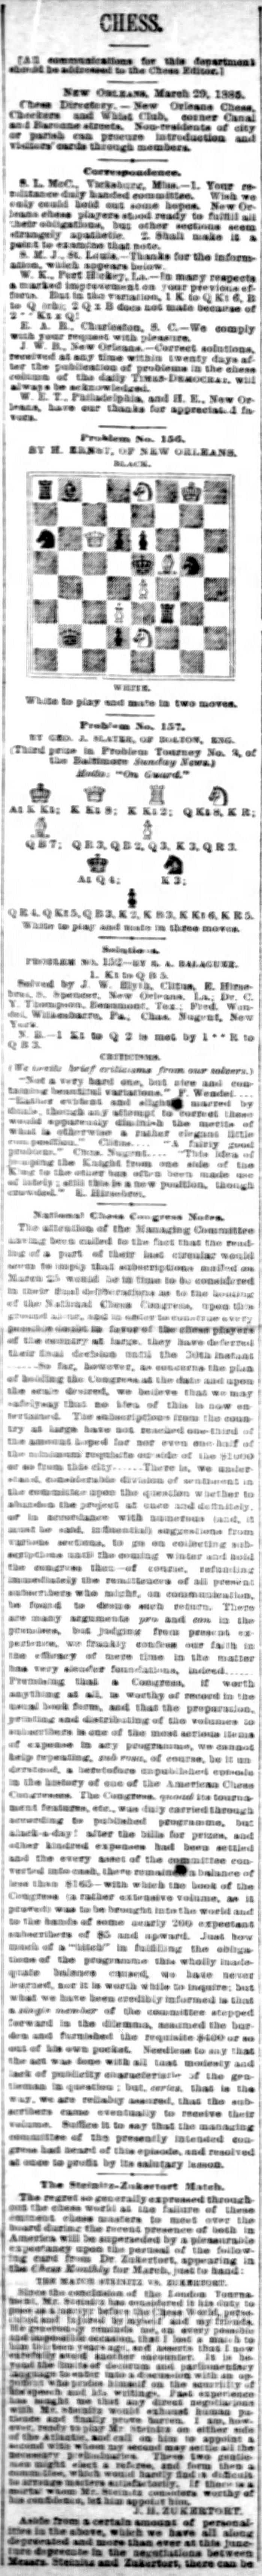 1885.03.29-01 New Orleans Times-Democrat.jpg